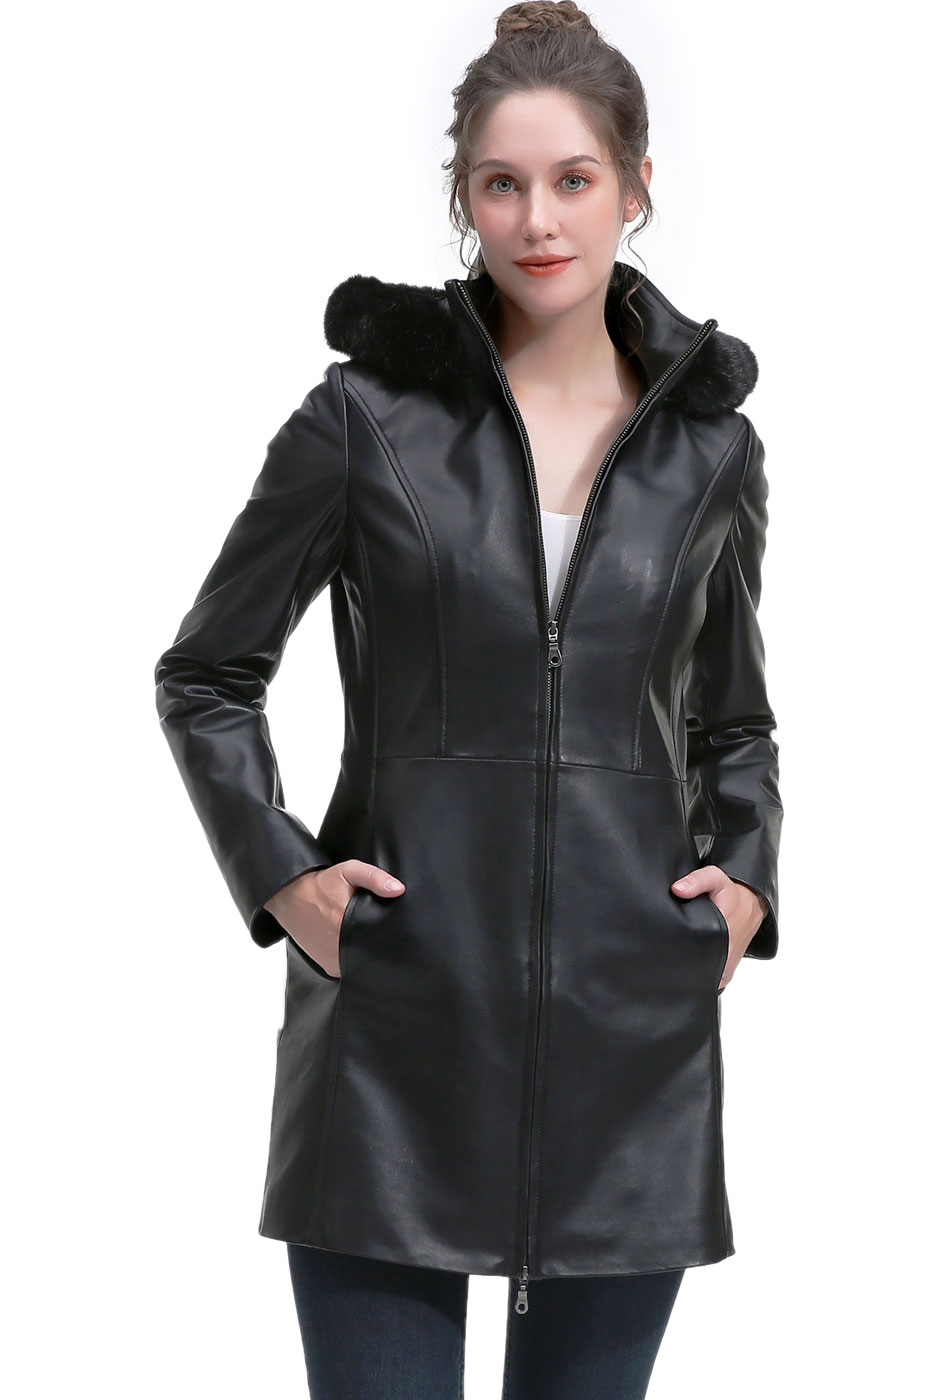 Women New Zealand Lambskin Leather Parka Coat (Regular & Plus Size & Petite) - image 1 of 5